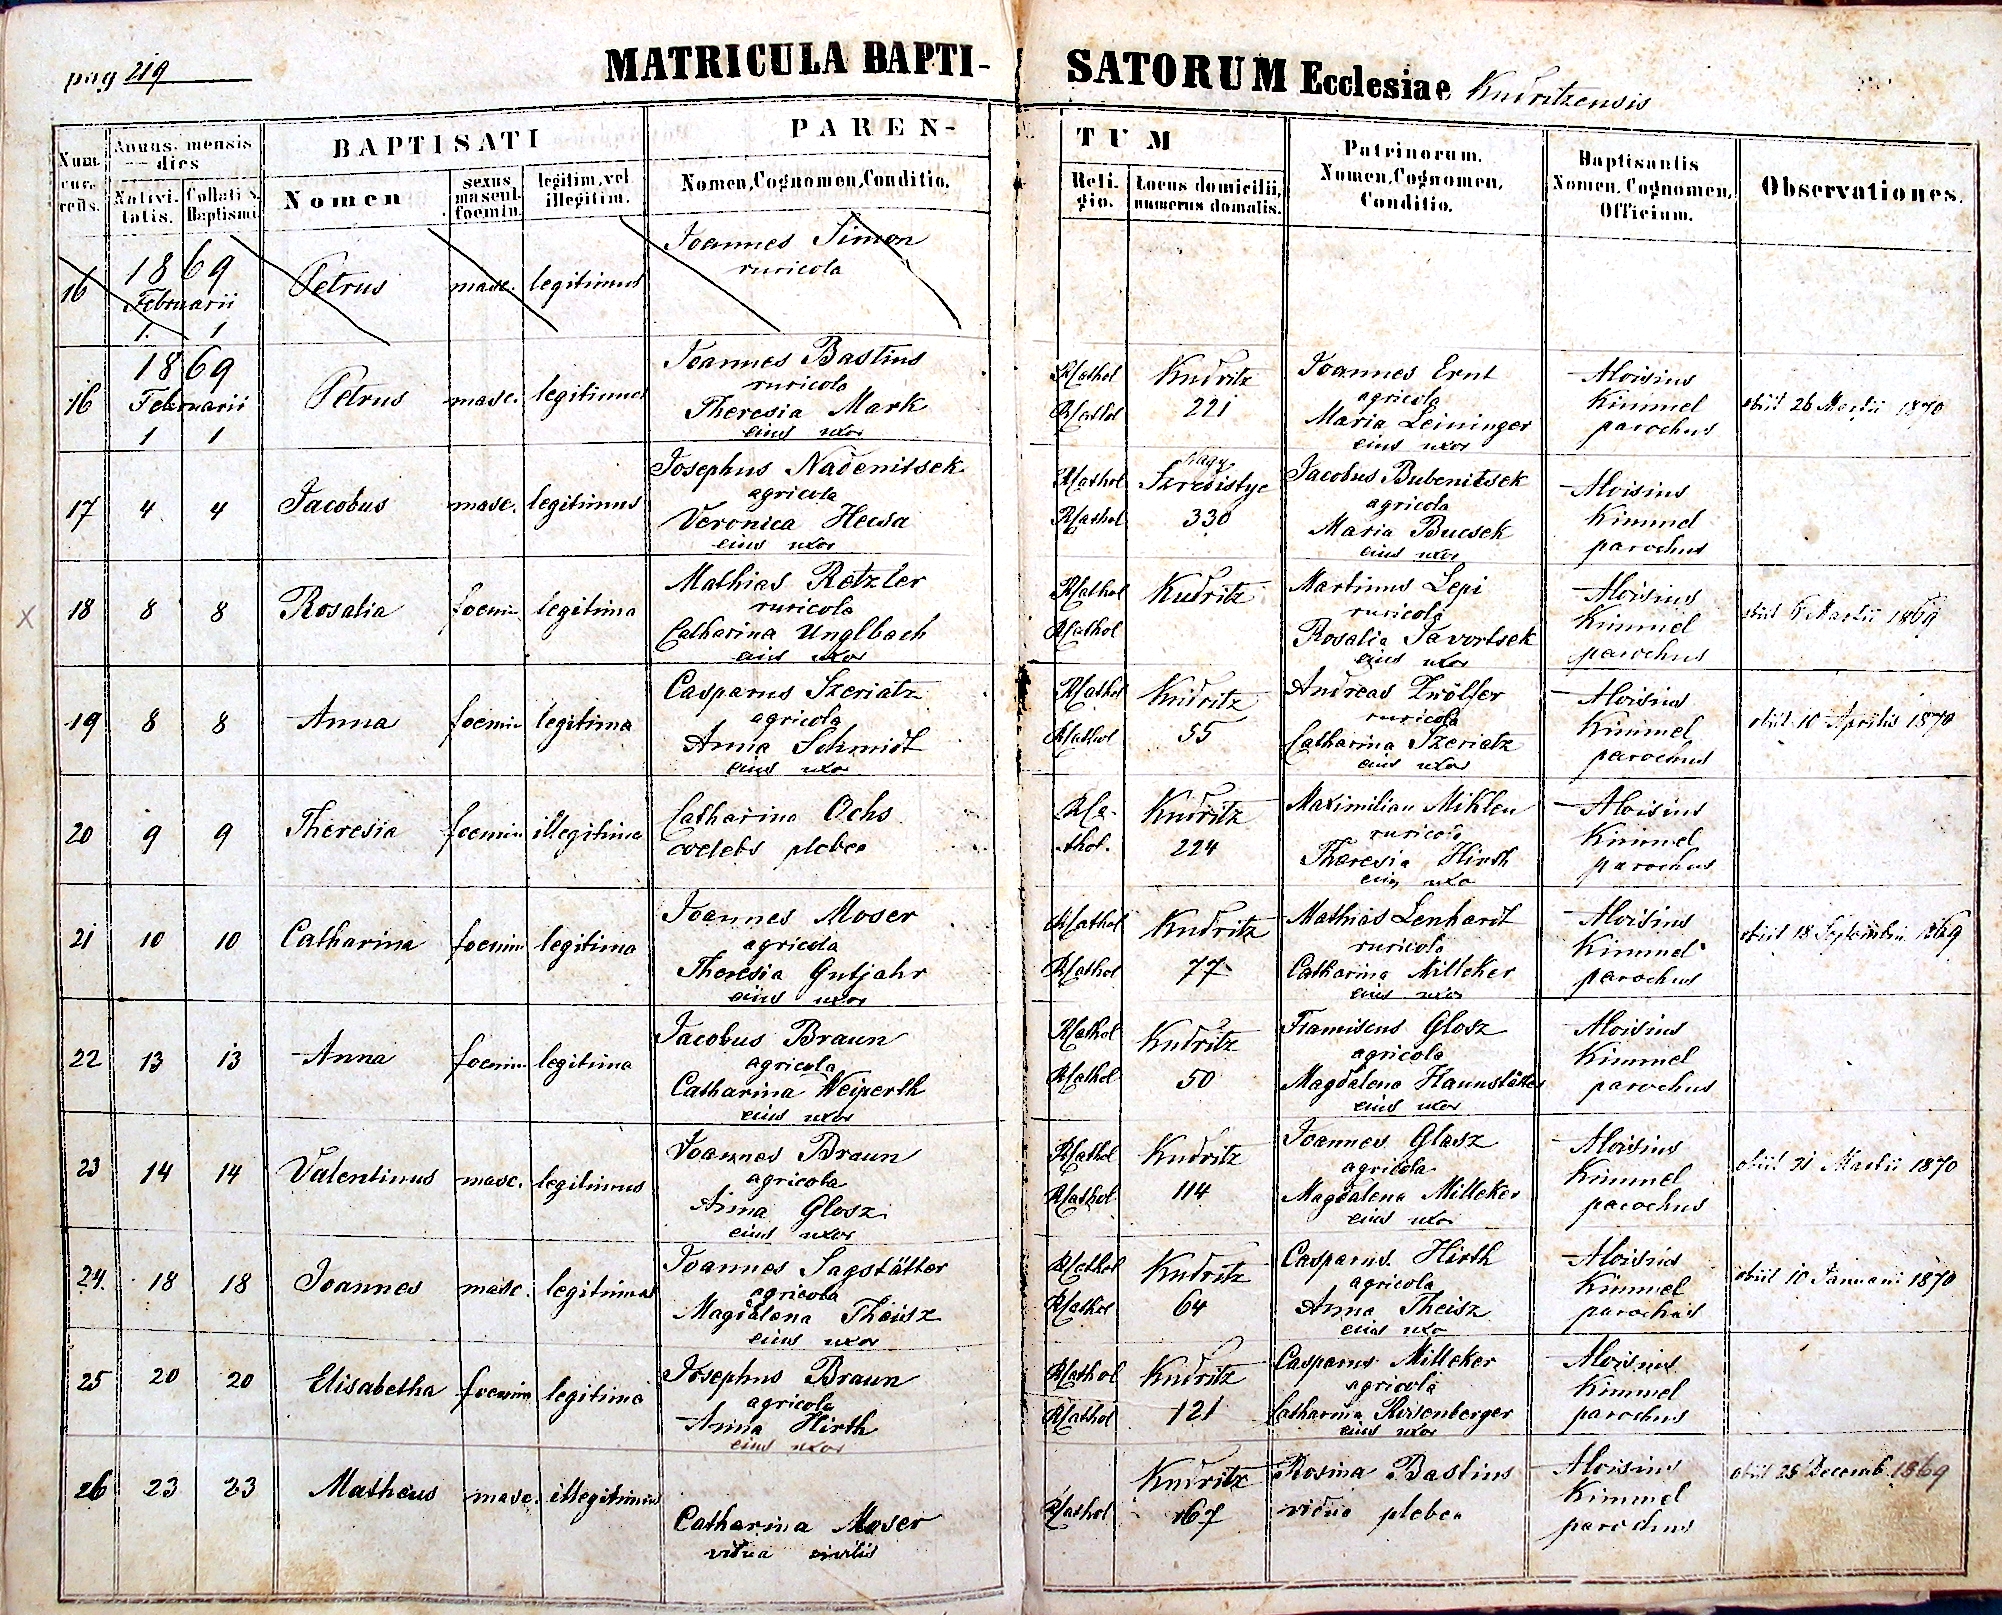 images/church_records/BIRTHS/1852-1870B/219